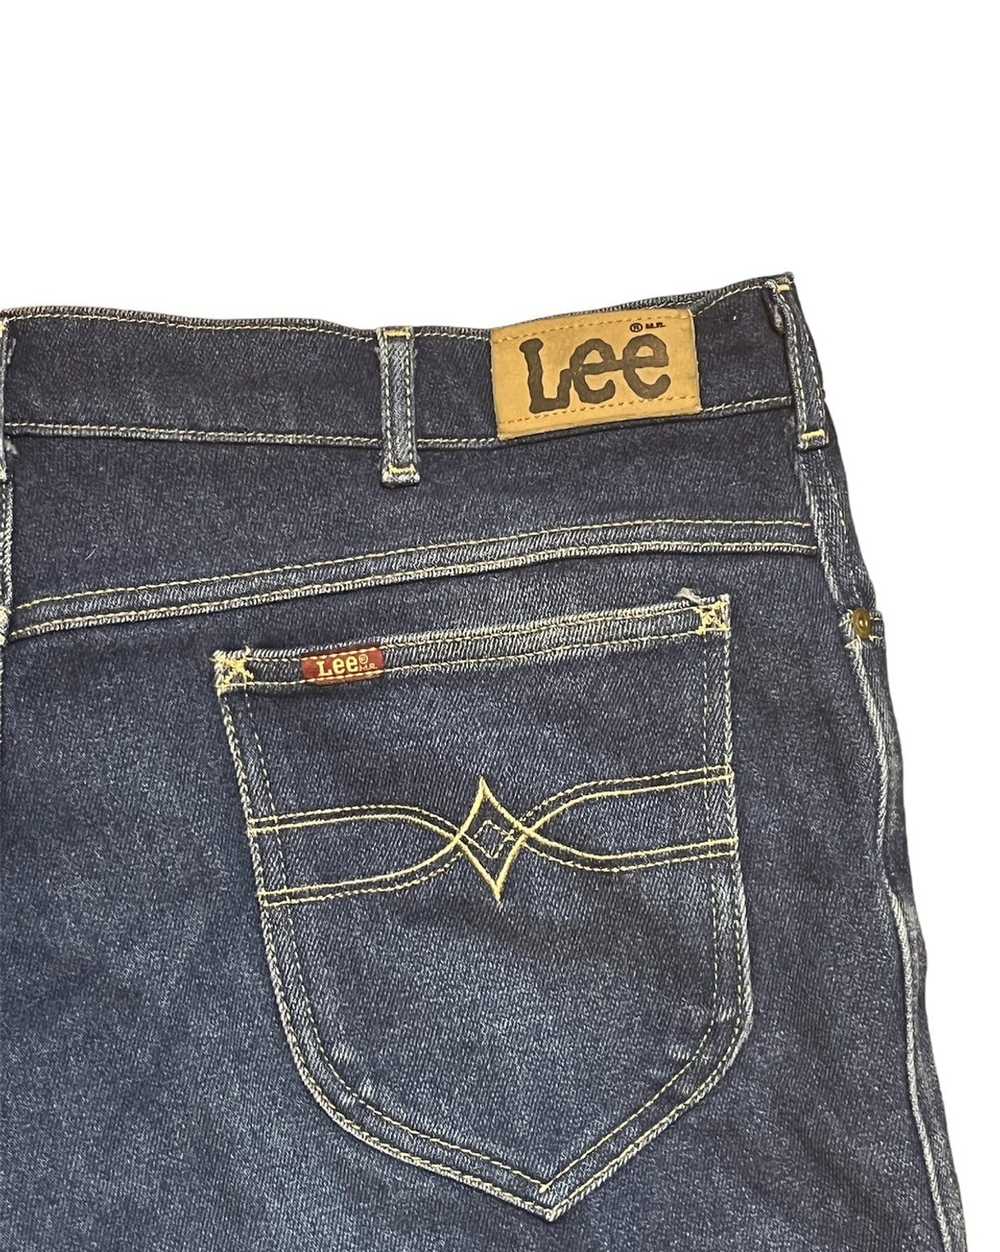 Lee × Vintage 1980s Lee denim jeans. - image 4